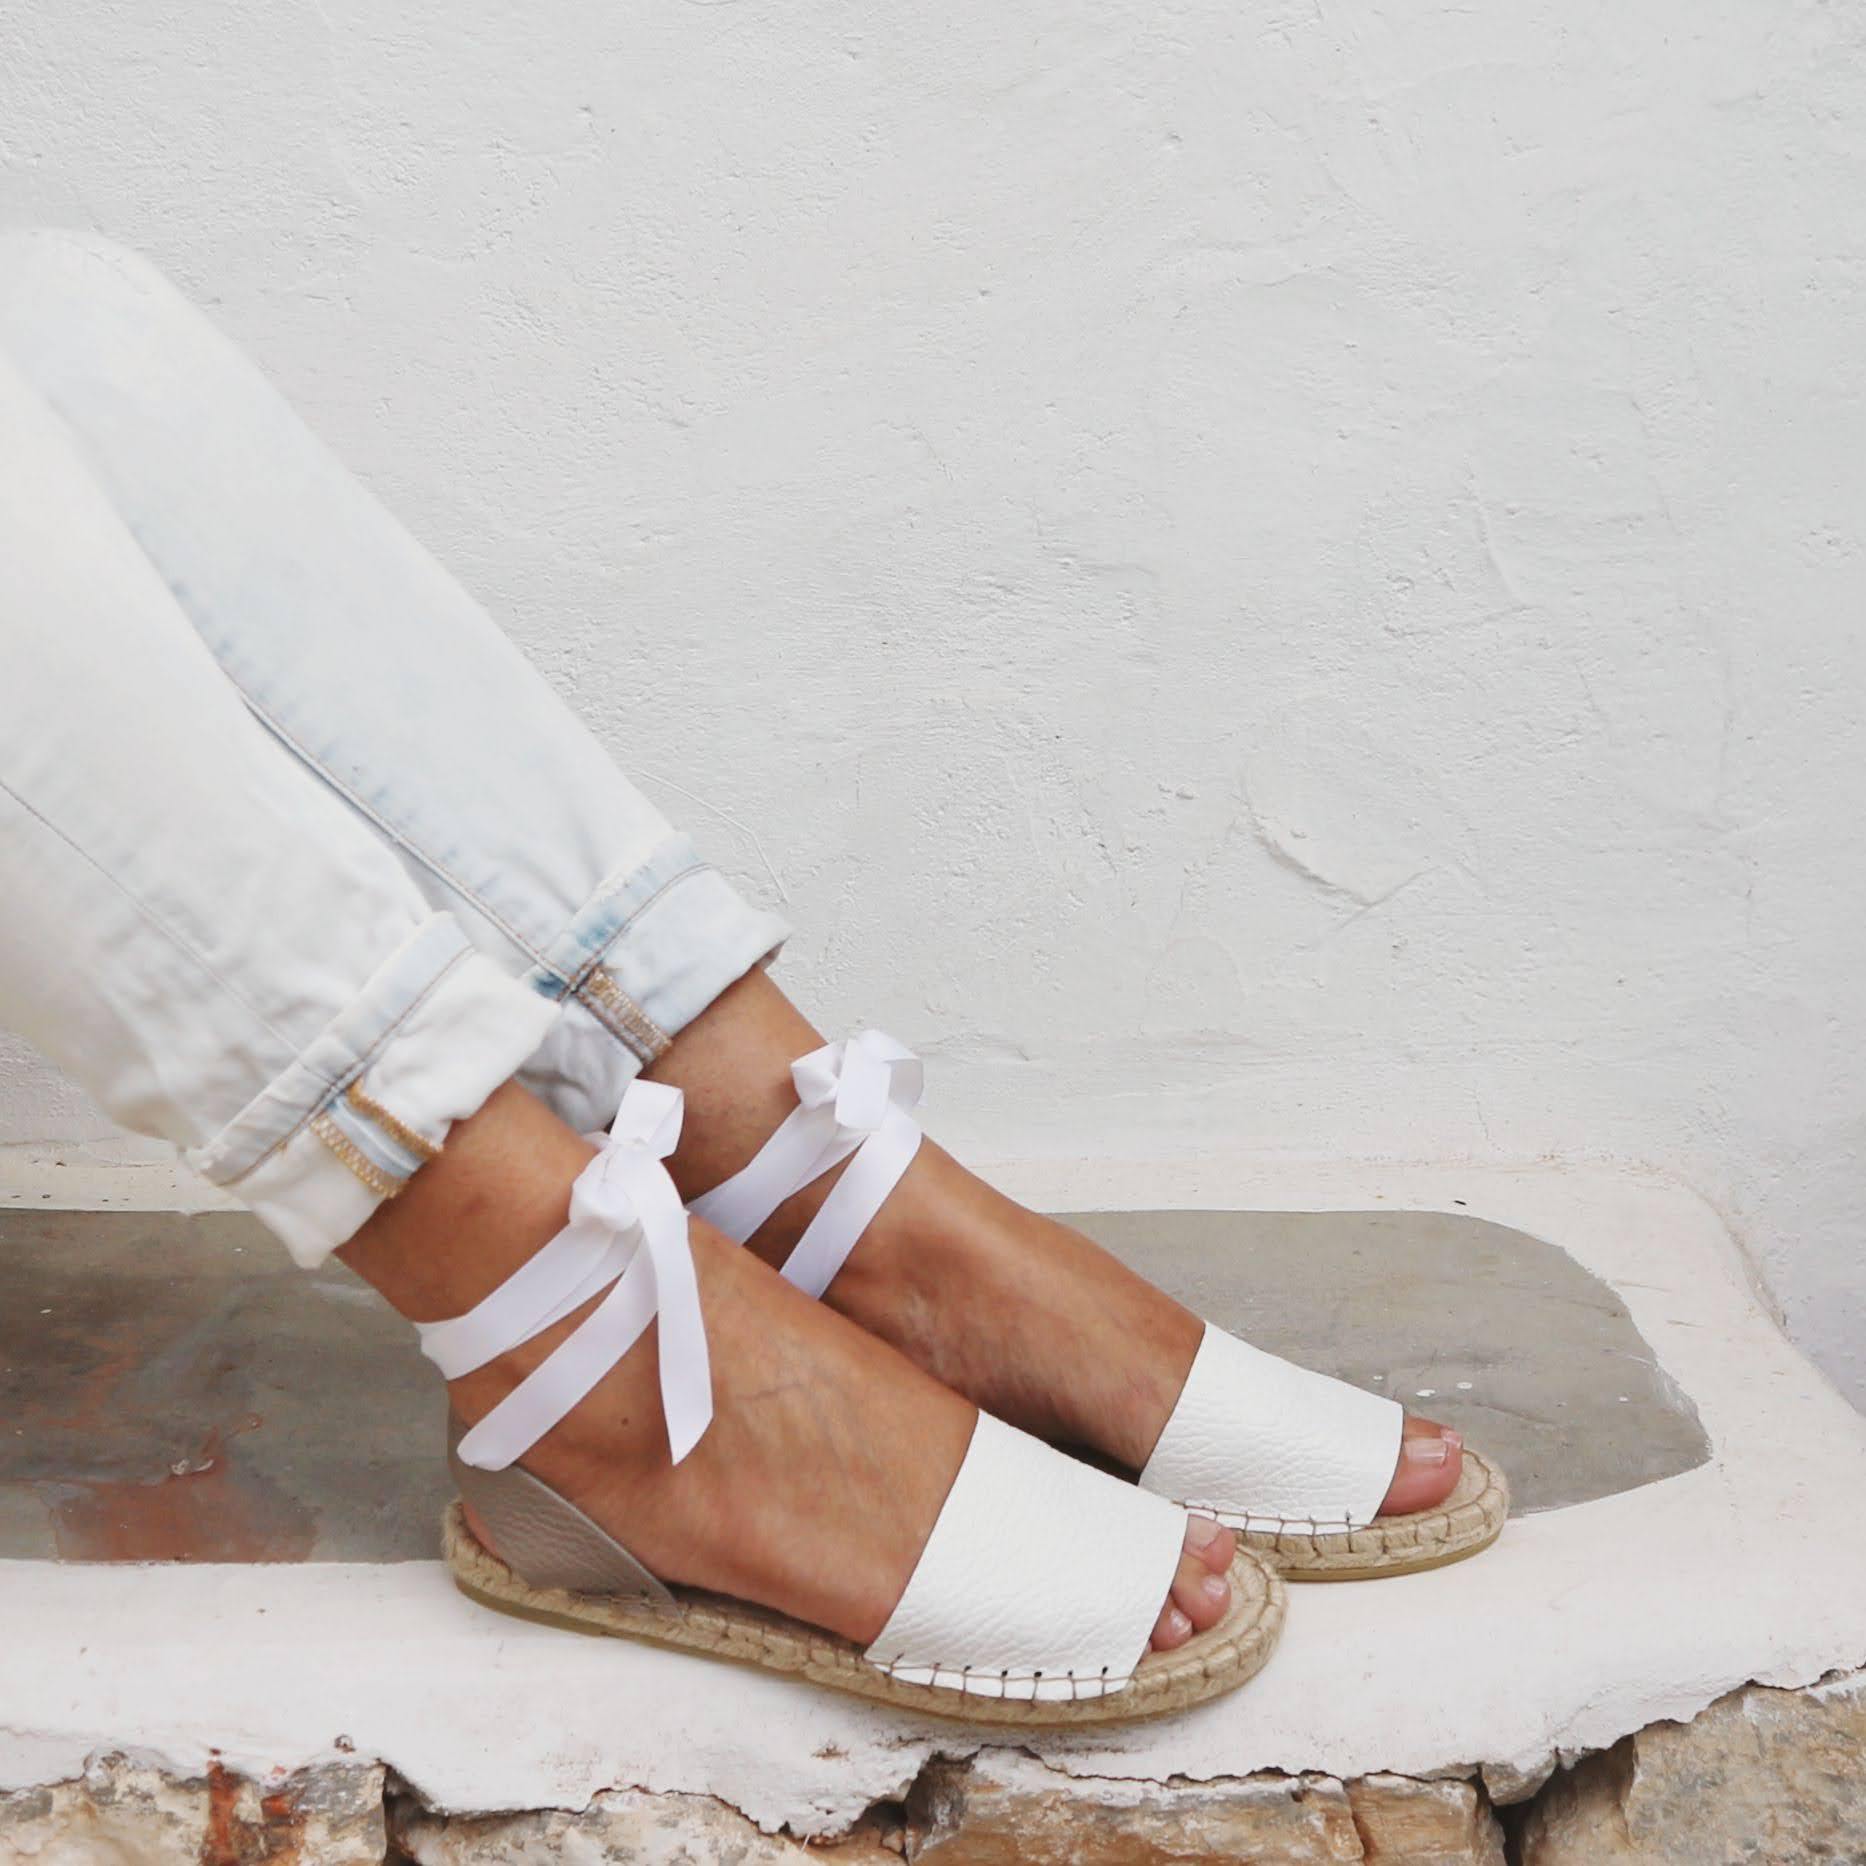 Leather Espadrilles Sandals - White - Classic Sole - Maslinda Designs